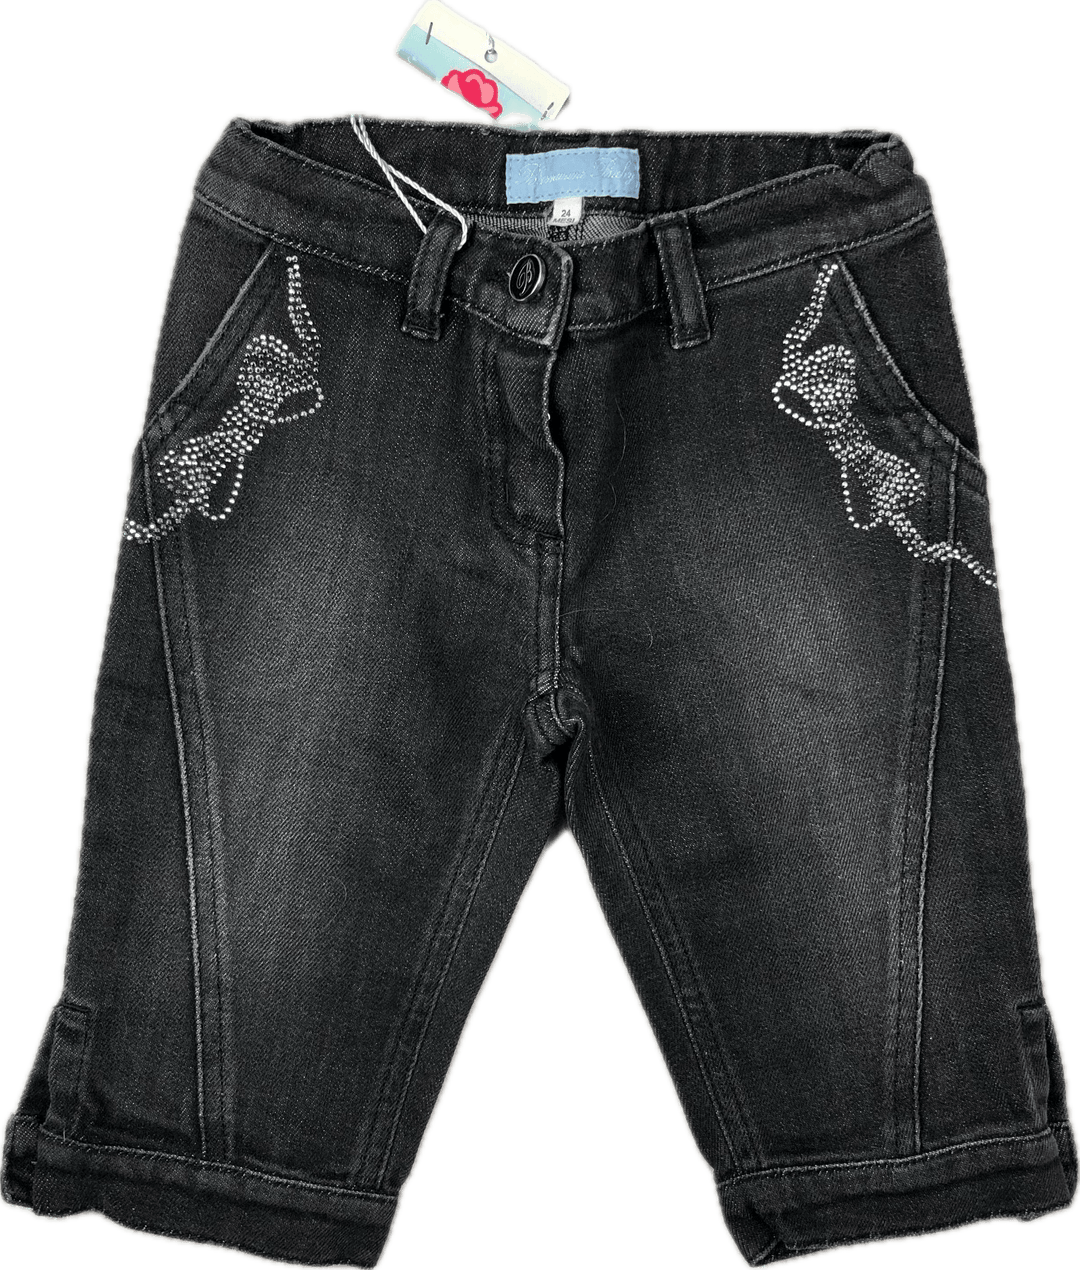 NWT- Blumarine Baby Girls Black Knickerbocker Jeans - Size 2 - Jean Pool